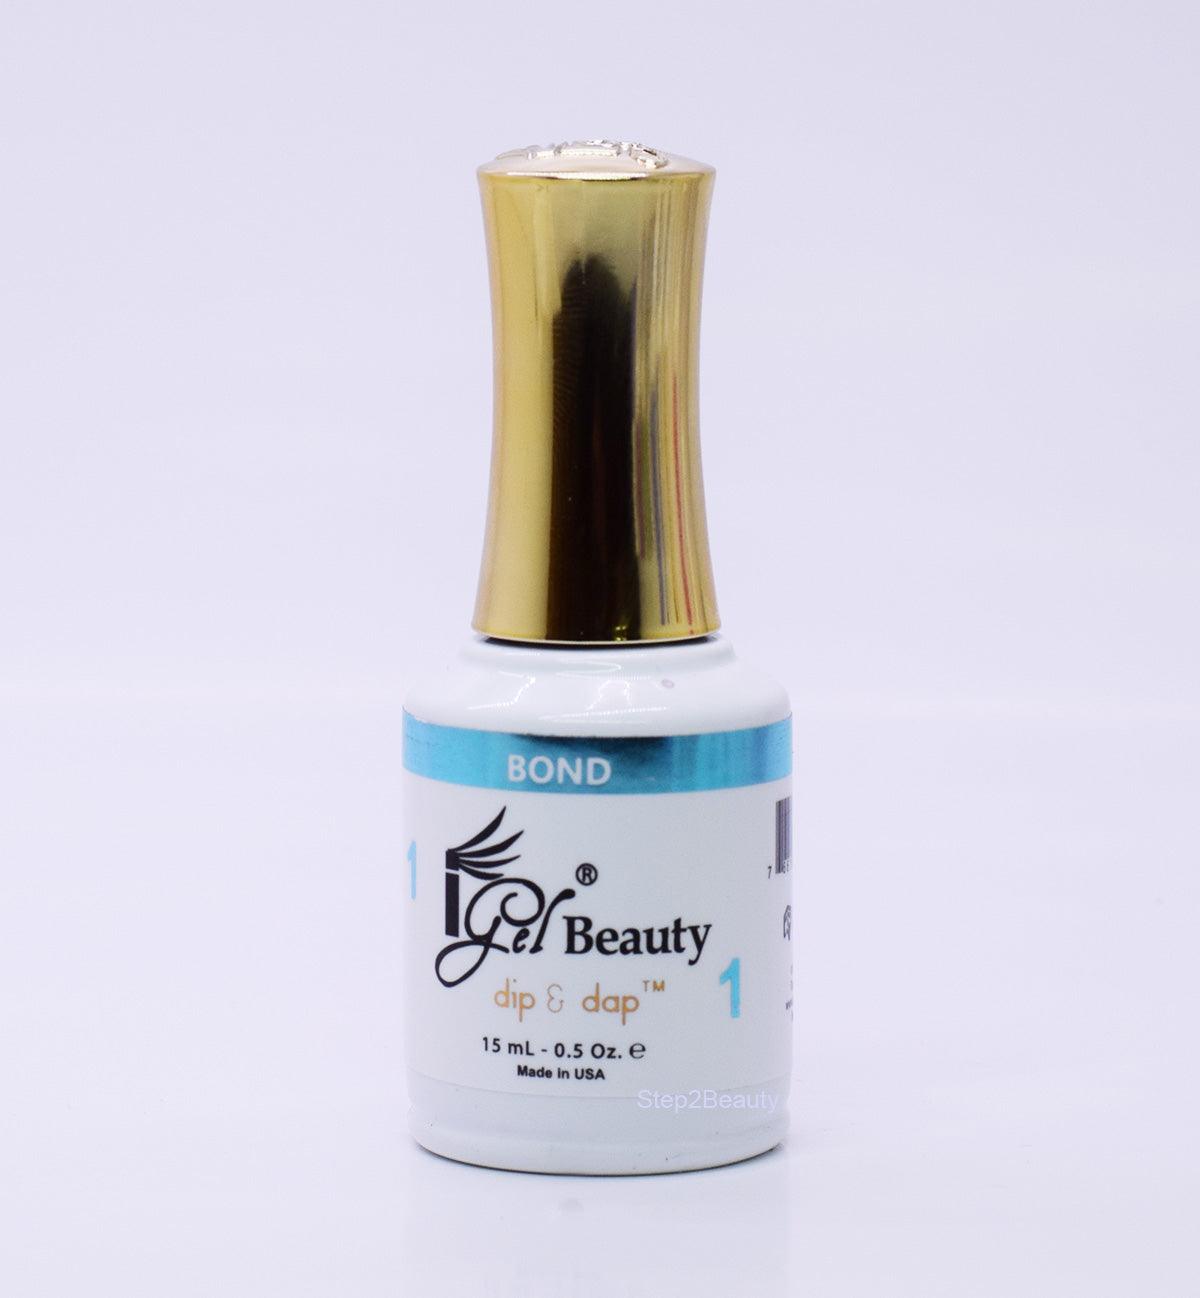 IGel Beauty Dip & Dap Liquid System -  Bond 0.5 oz